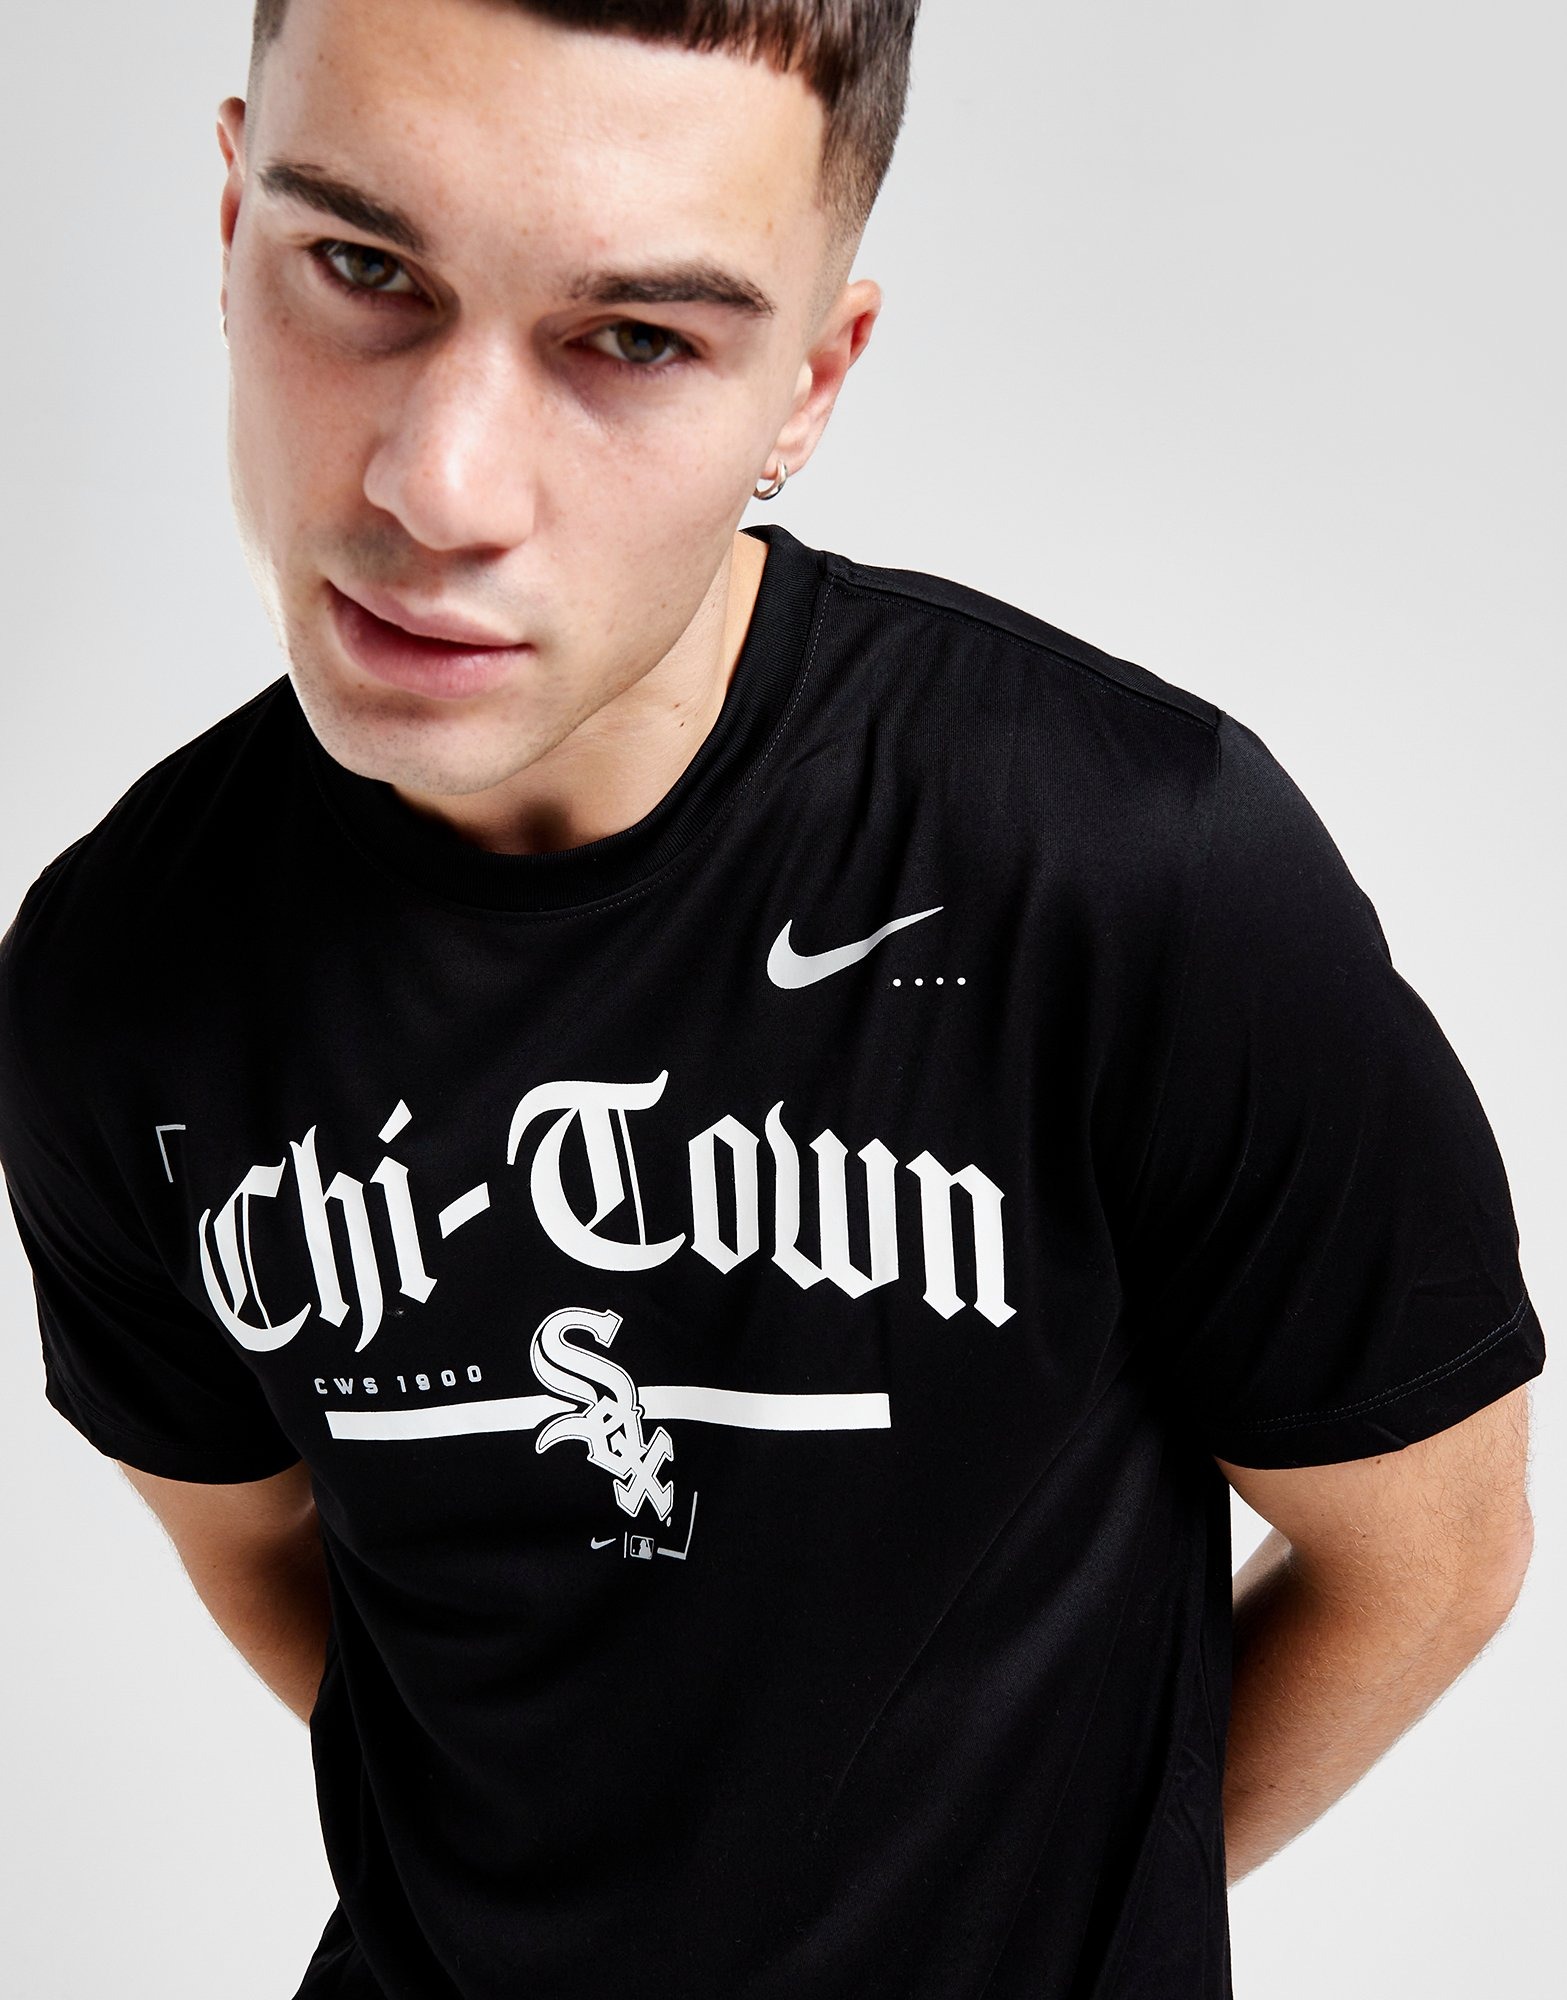 Men's Nike Black Chicago White Sox Big & Tall Local Legend T-Shirt